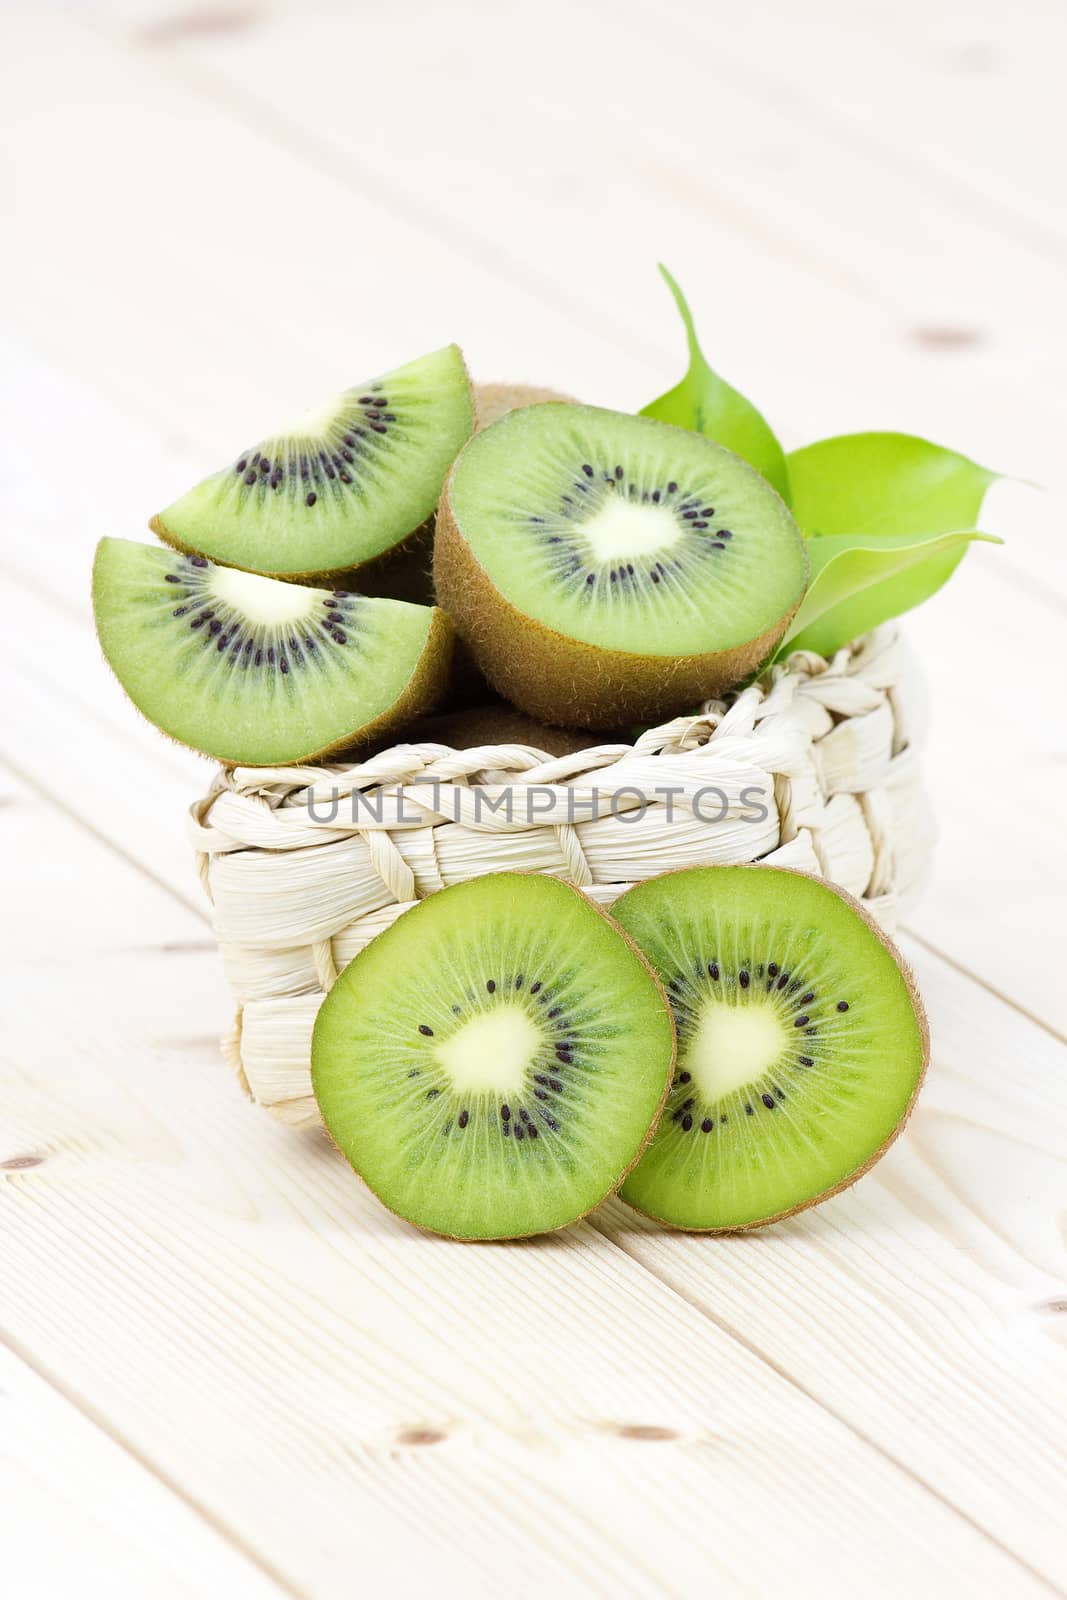 kiwi fruits by miradrozdowski